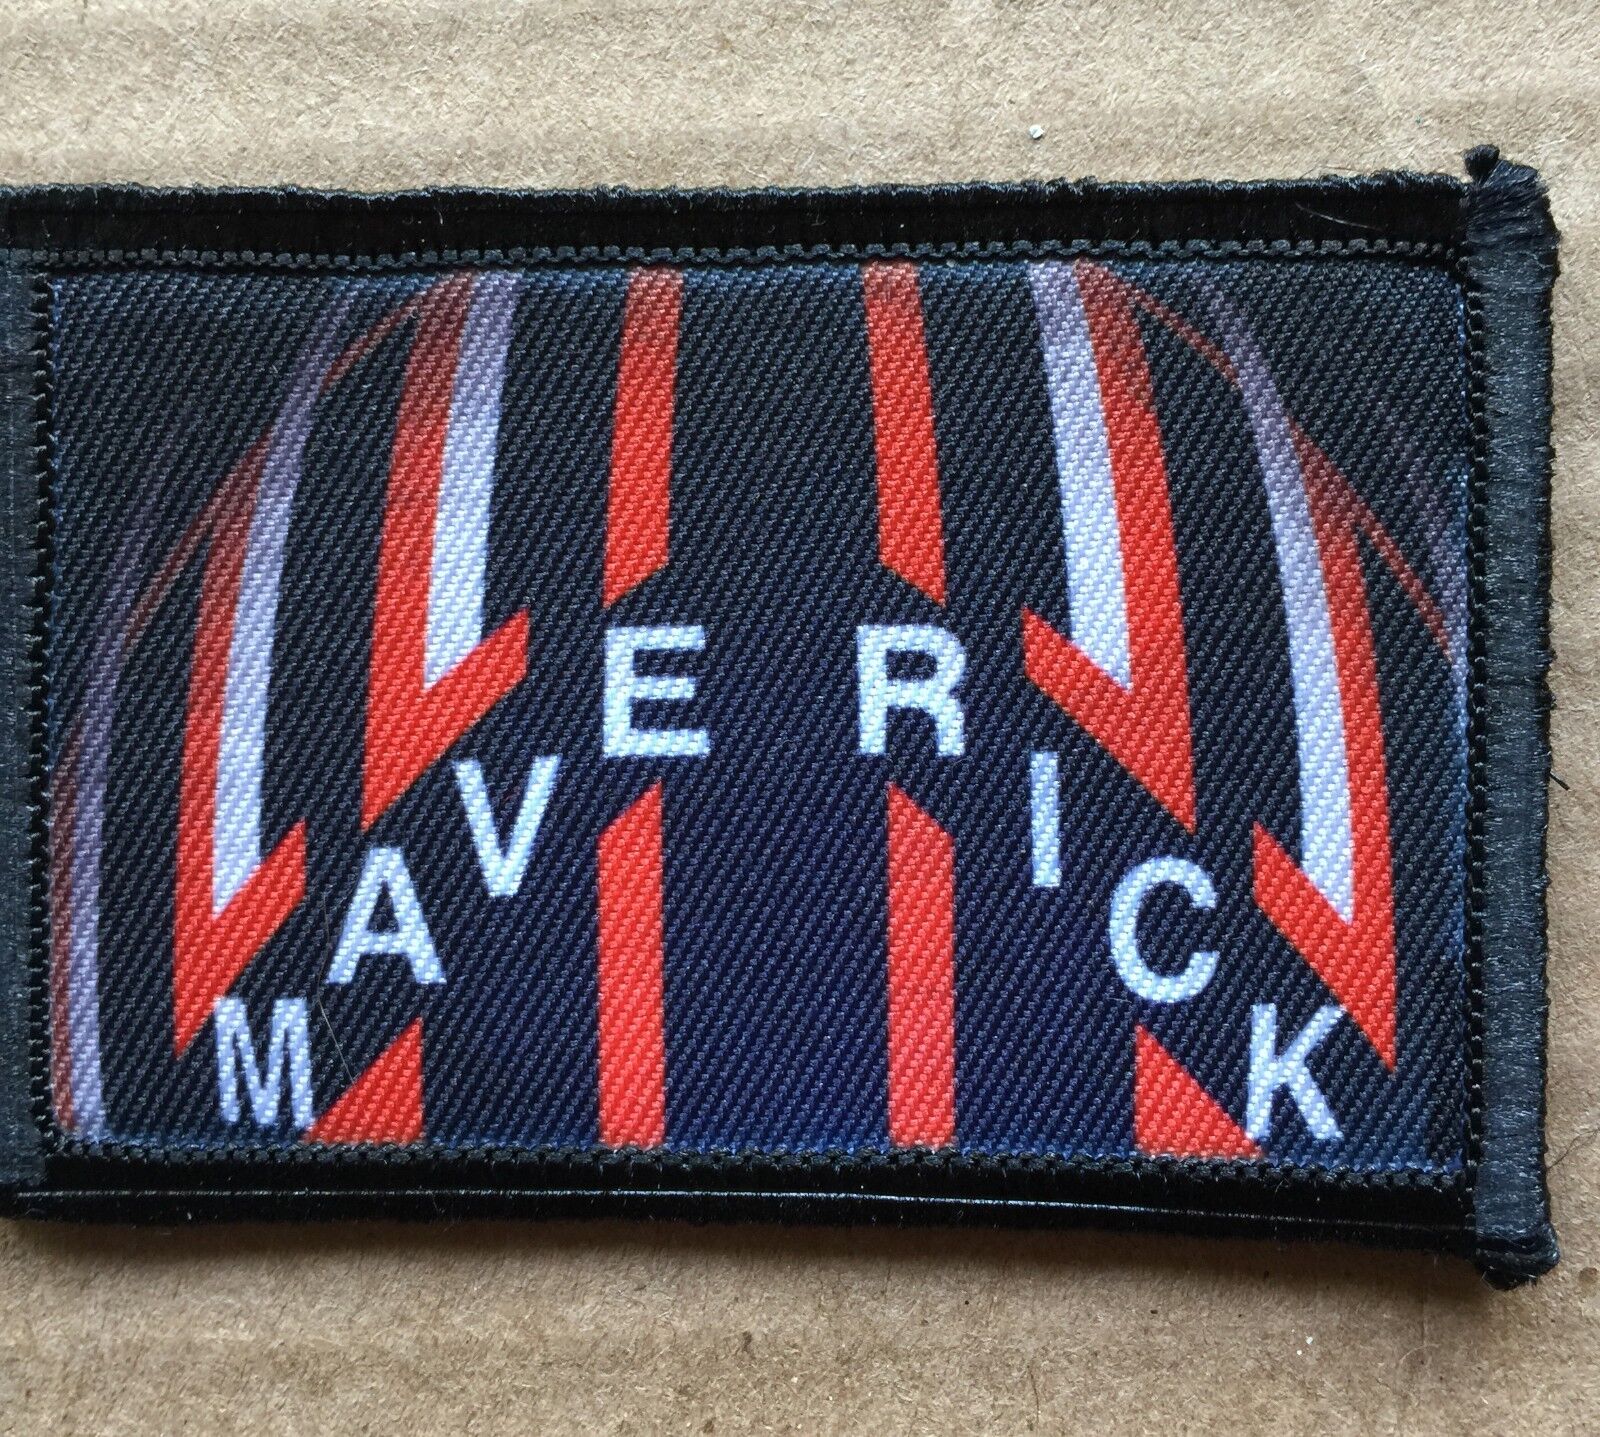 Top Gun Movie Maverick Morale Patch Tactical Military USA Hook Badge Army Flag